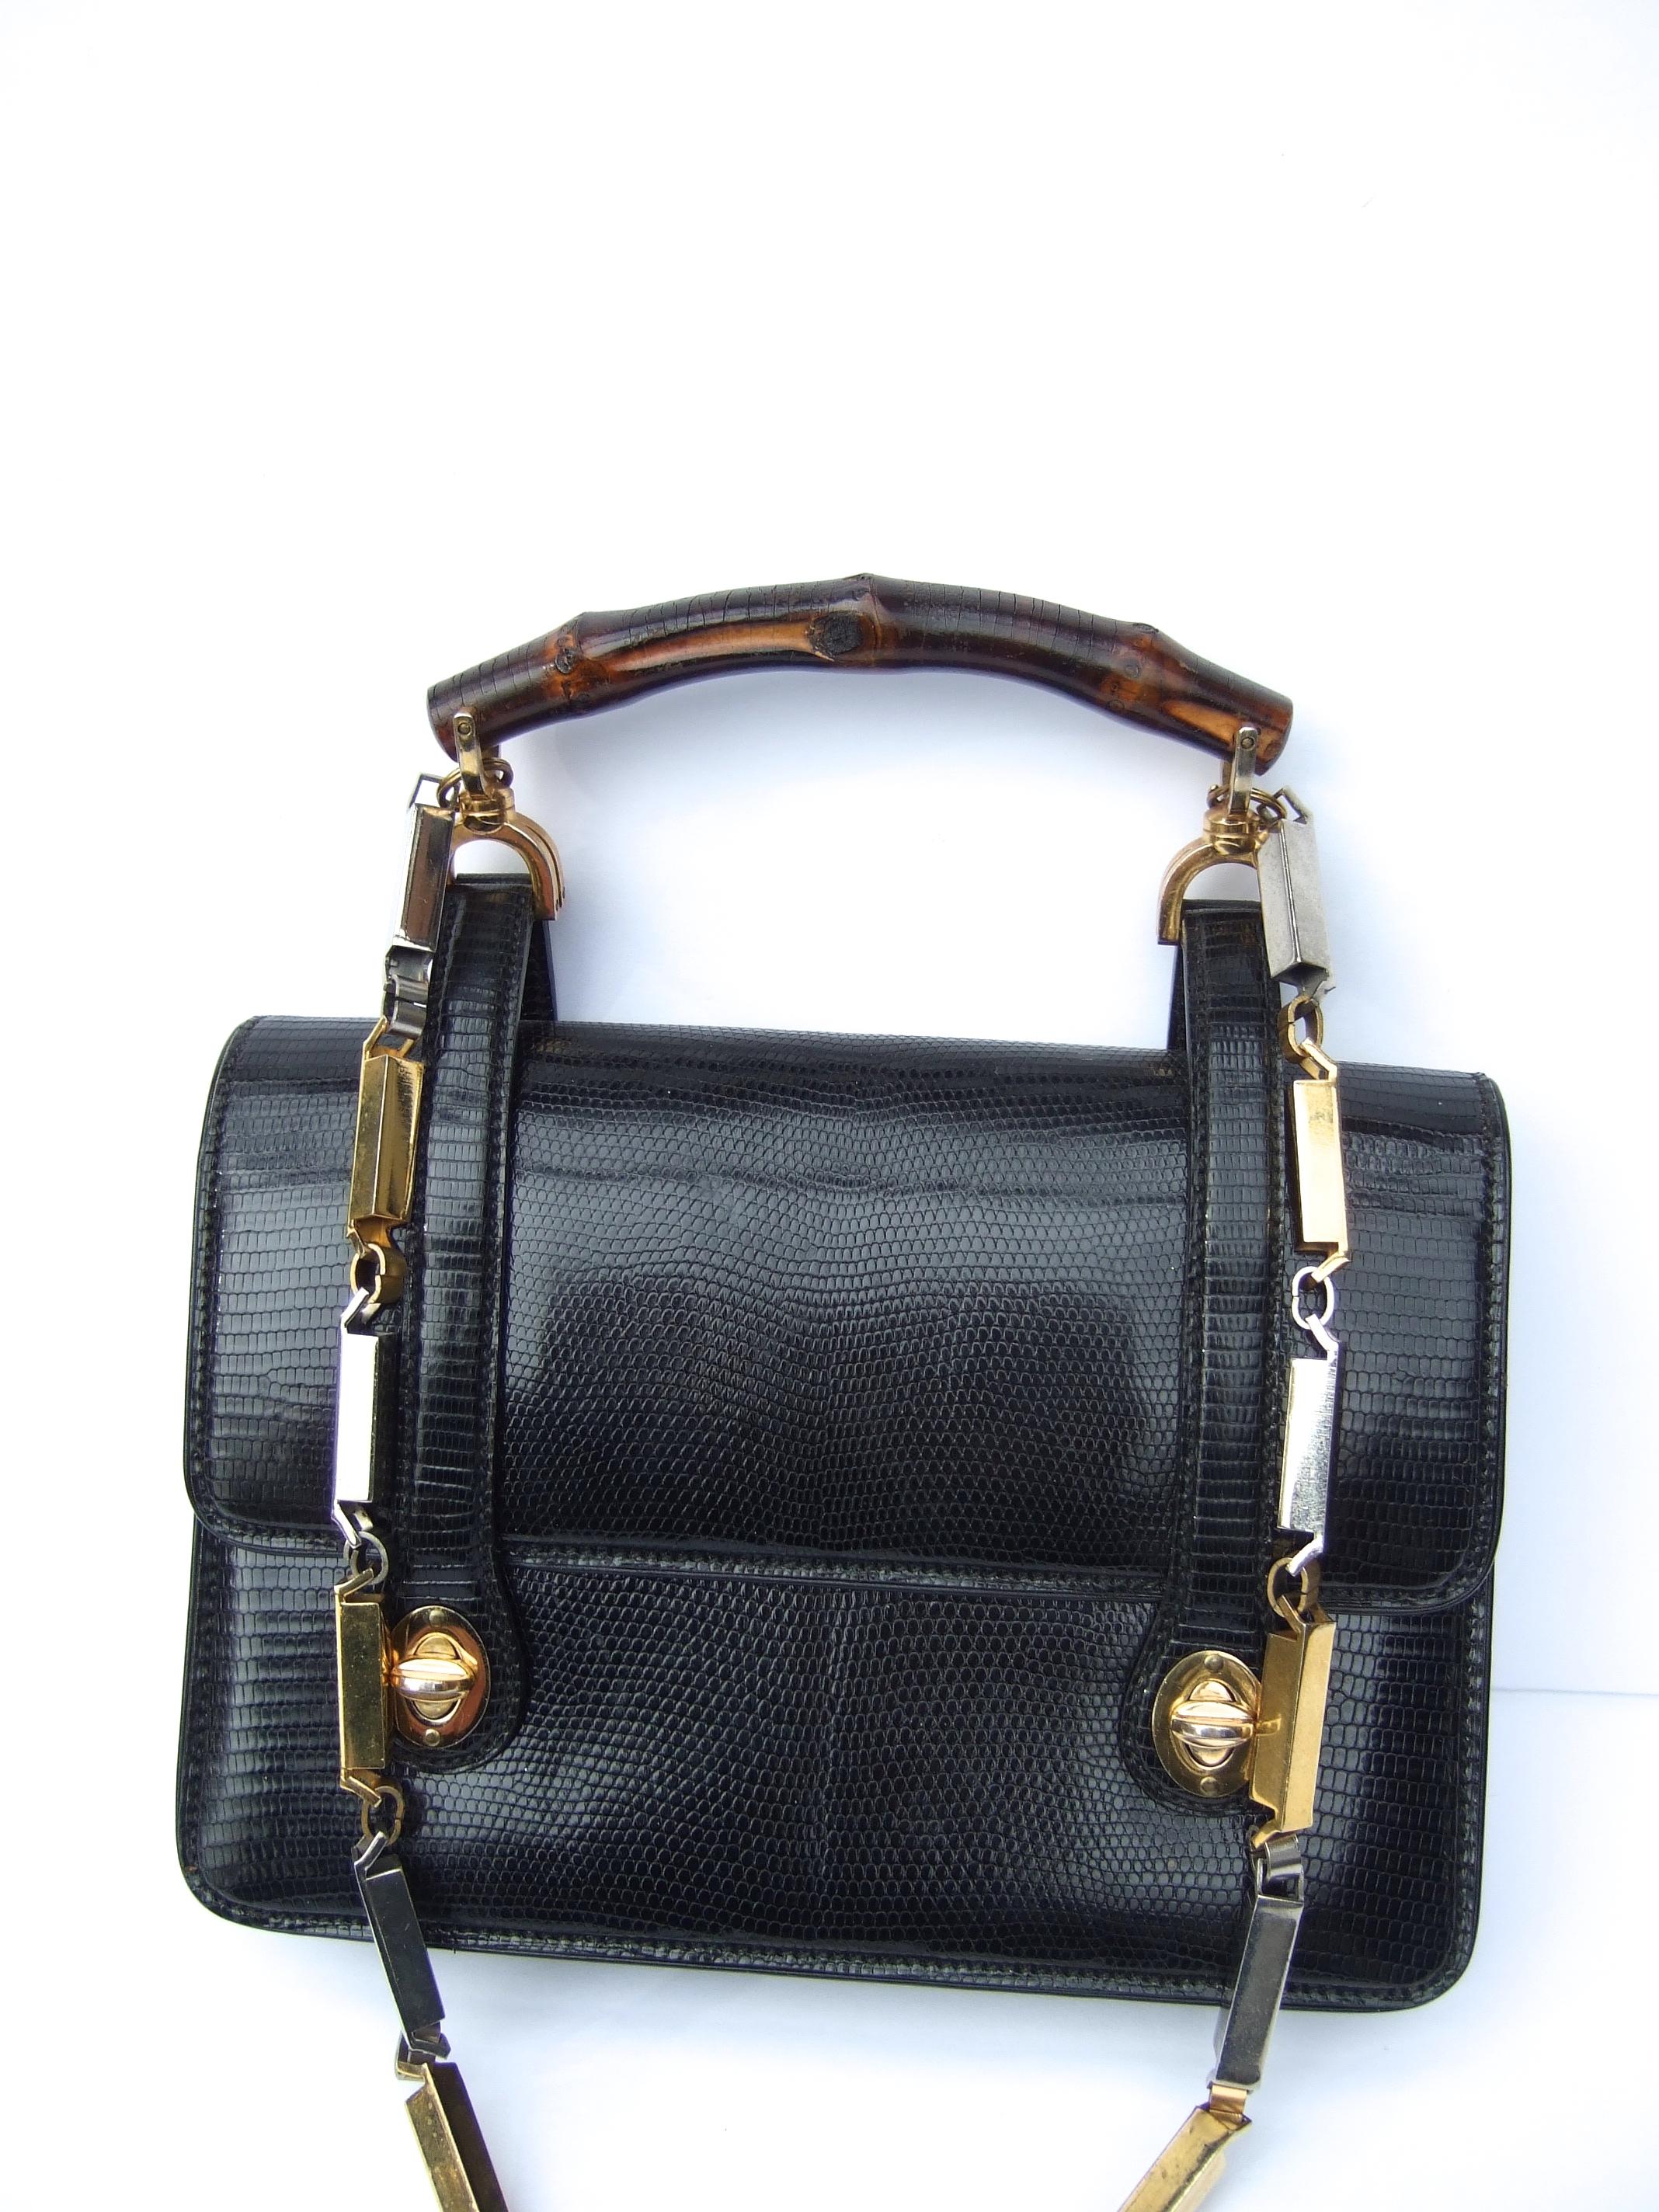 Rare Gucci Italian Black Lizard Leather Handbag - Shoulder Bag c 1970s 4